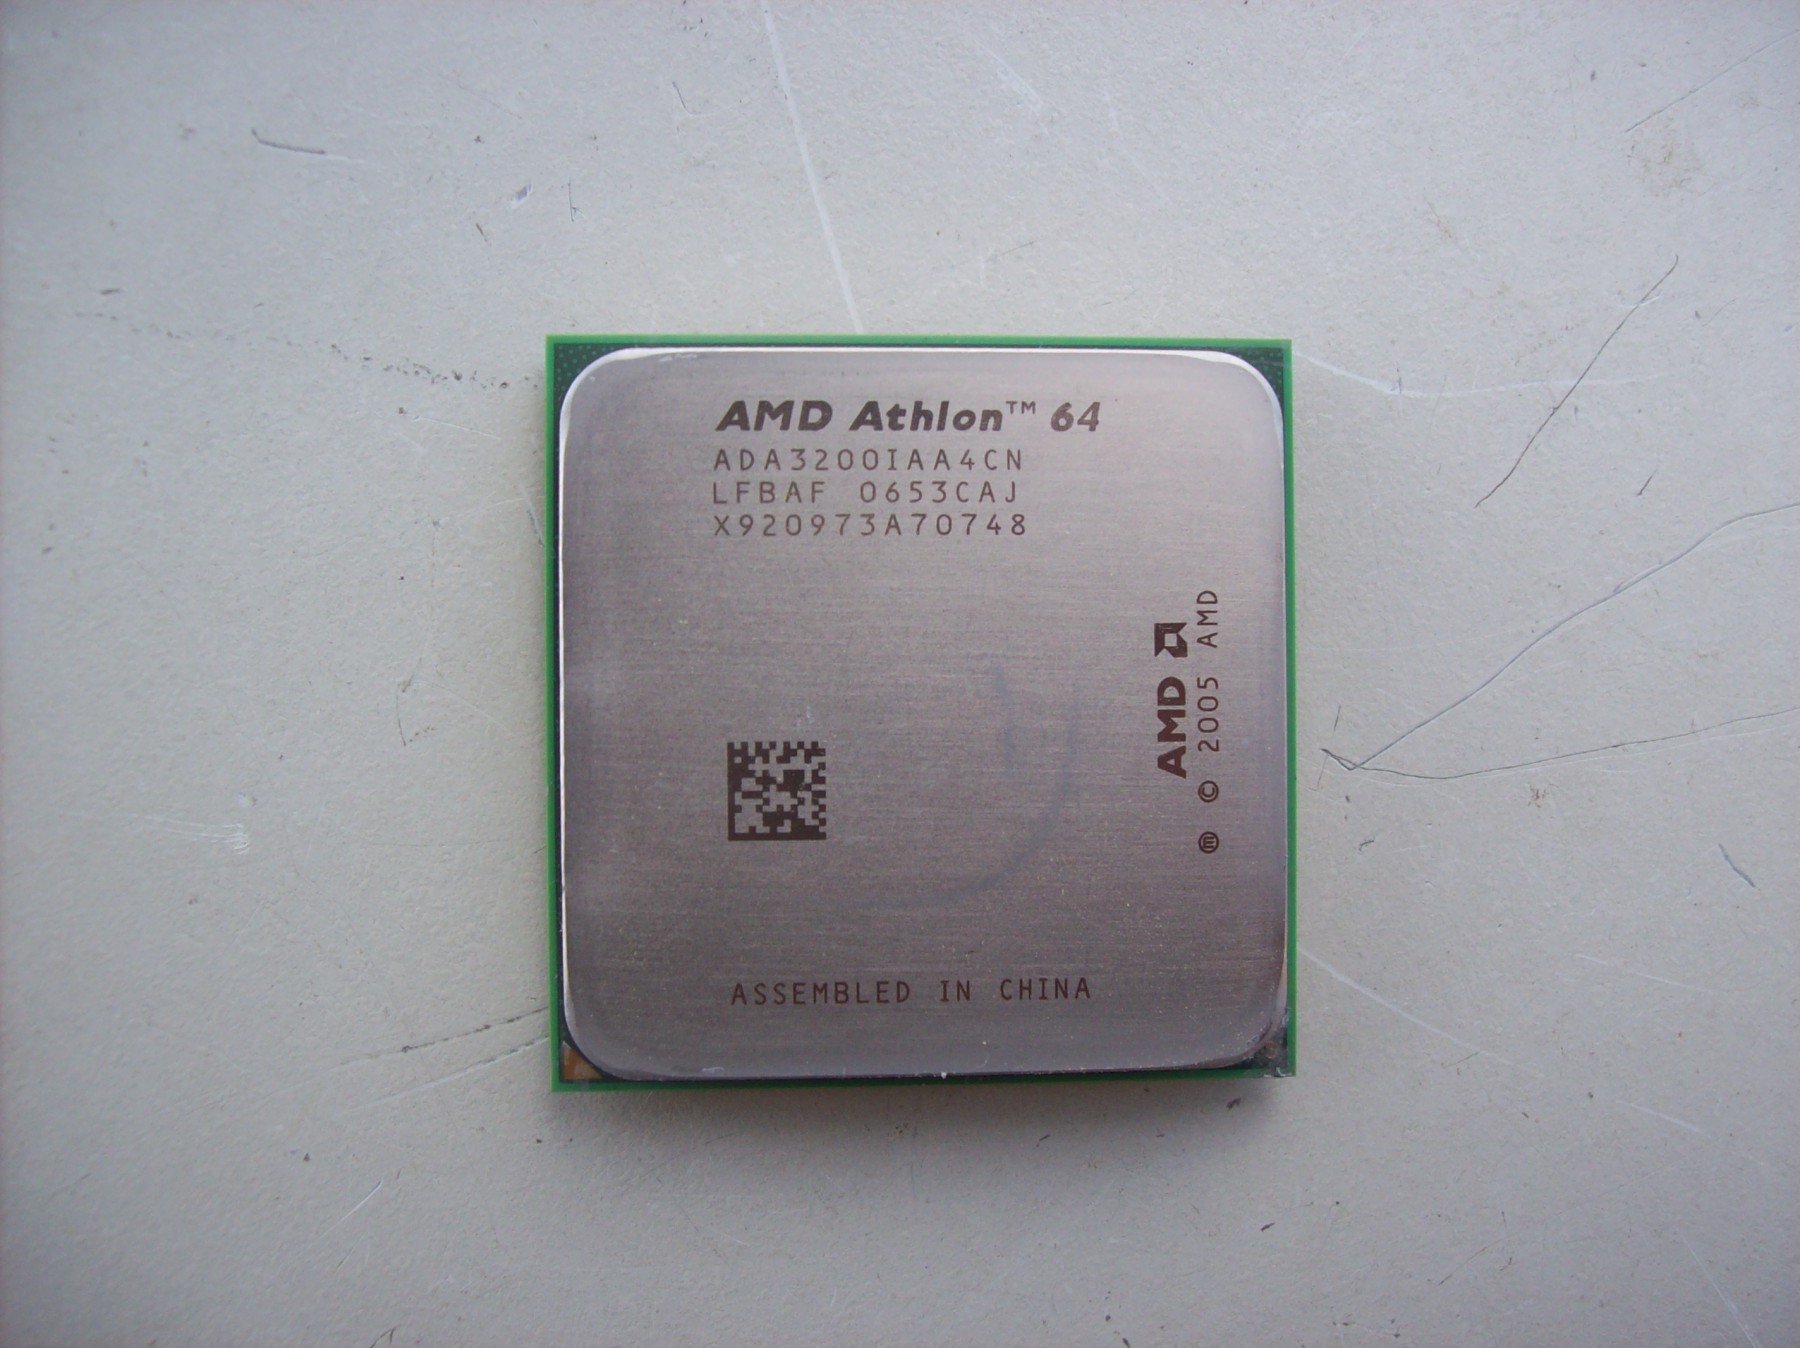 AMD Athlon 64 2001 года. Атлон 64 2003 года. ООО Атлон. АМД Атлон 64 ада 3200iaa4cn цена.